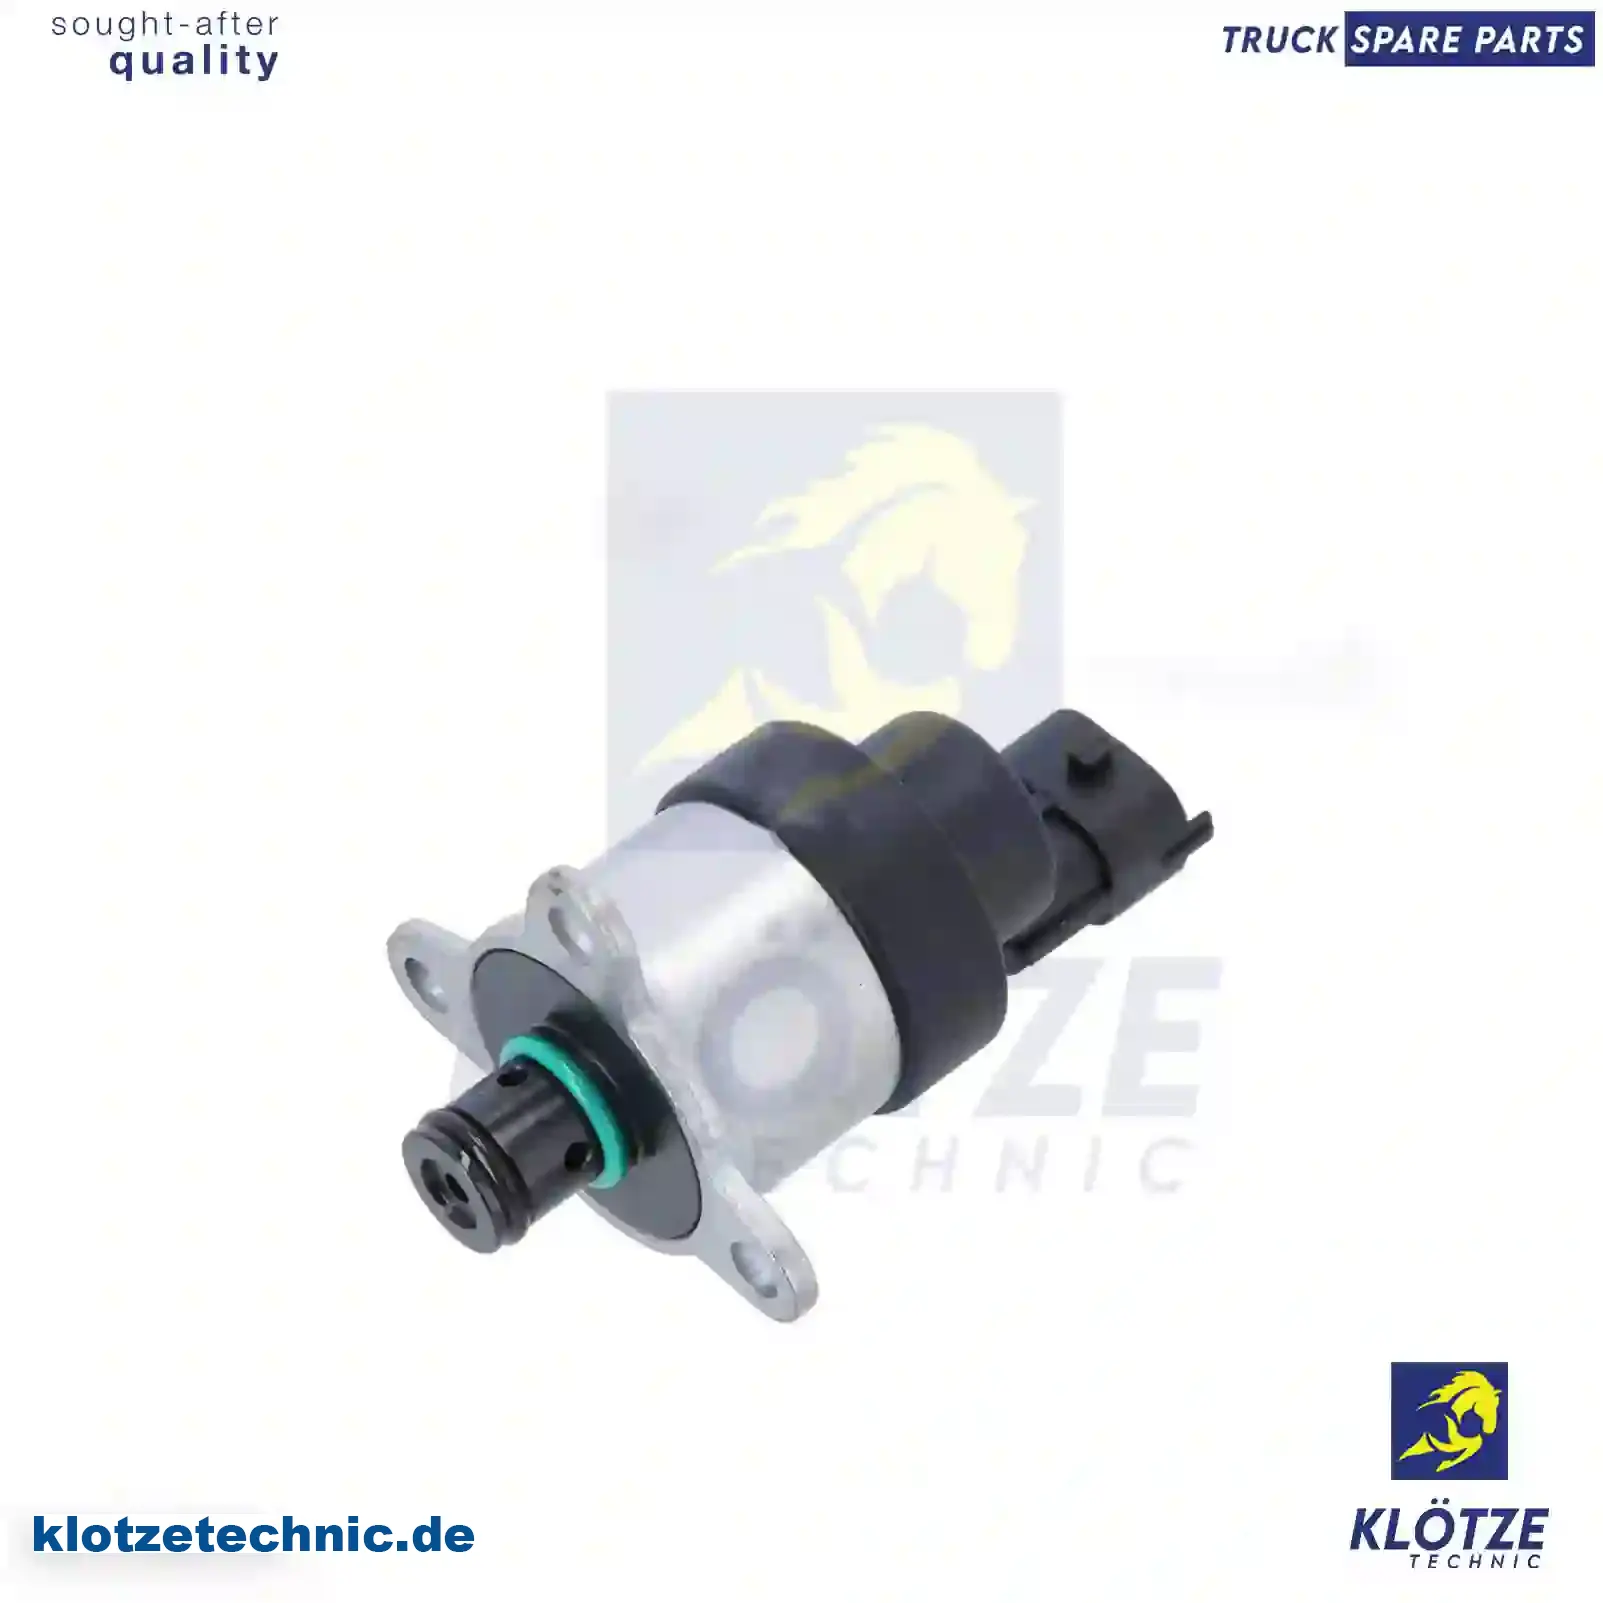 Control valve, injection pump, 51125050033, 2V5130765, ZG02401-0008 || Klötze Technic